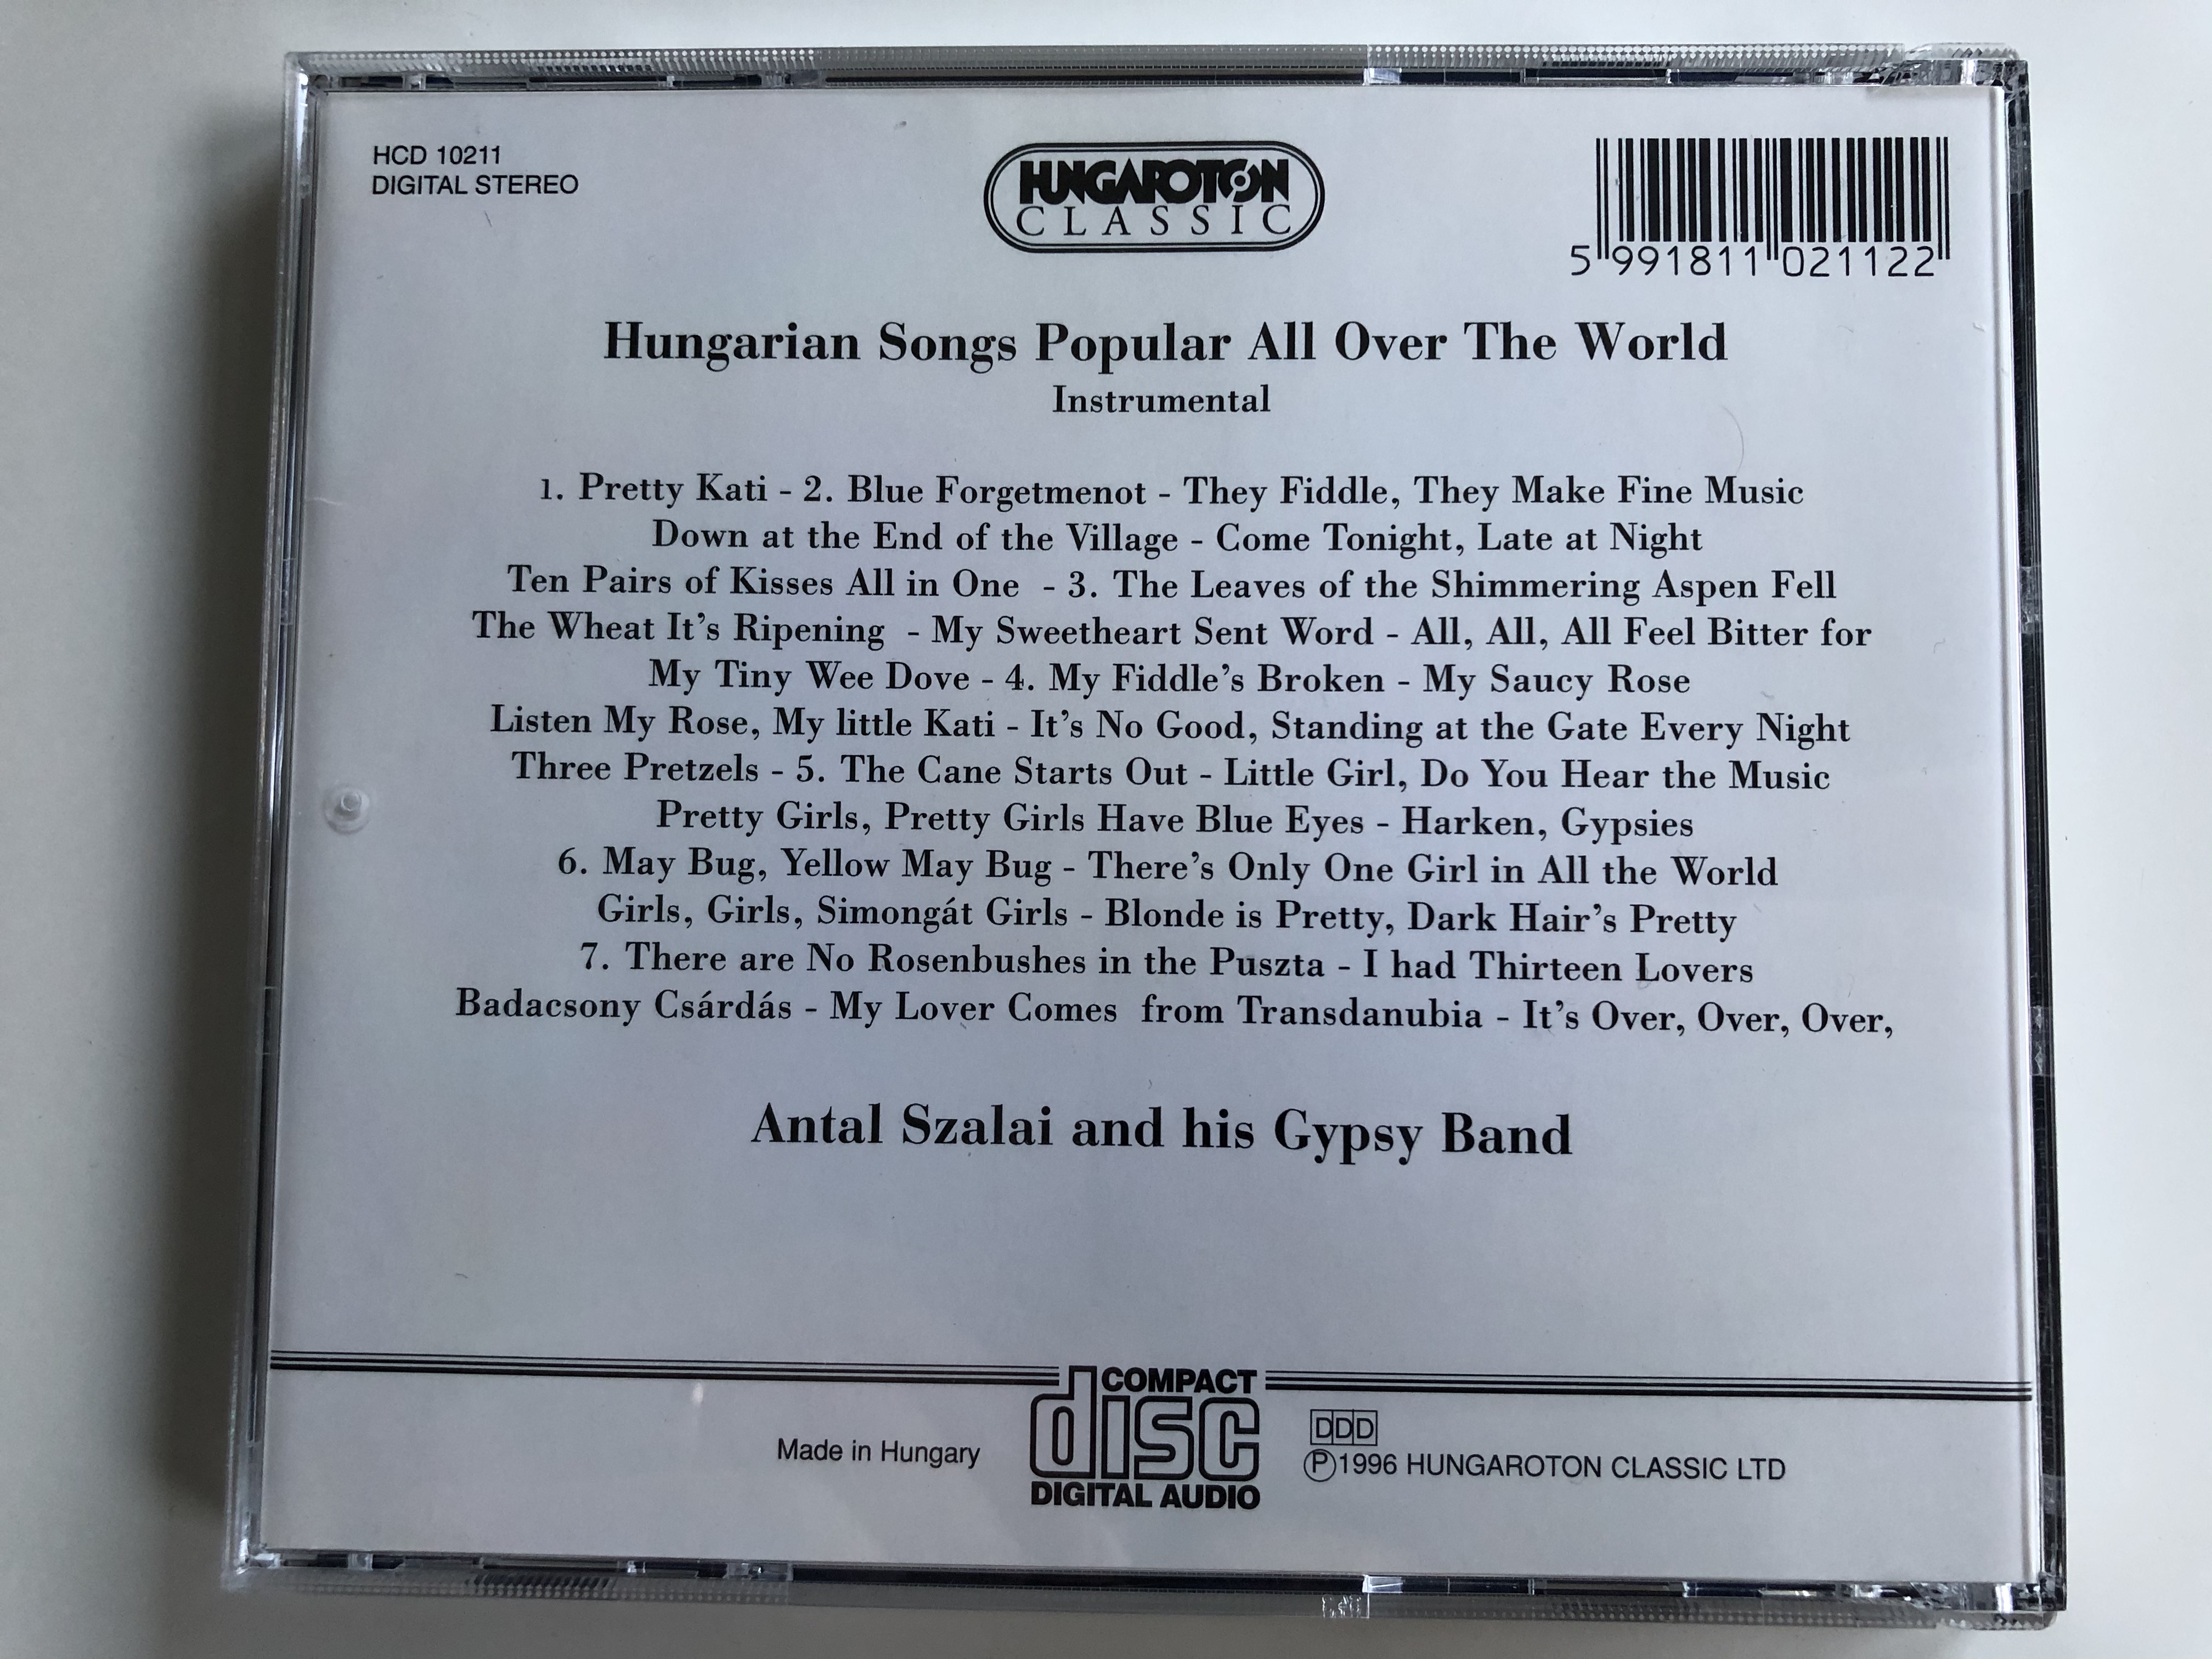 helyre-kati-hungarian-songs-popular-around-the-world-antal-szalai-and-his-gypsy-band-hungaroton-classic-audio-cd-1996-stereo-hcd-10211-6-.jpg